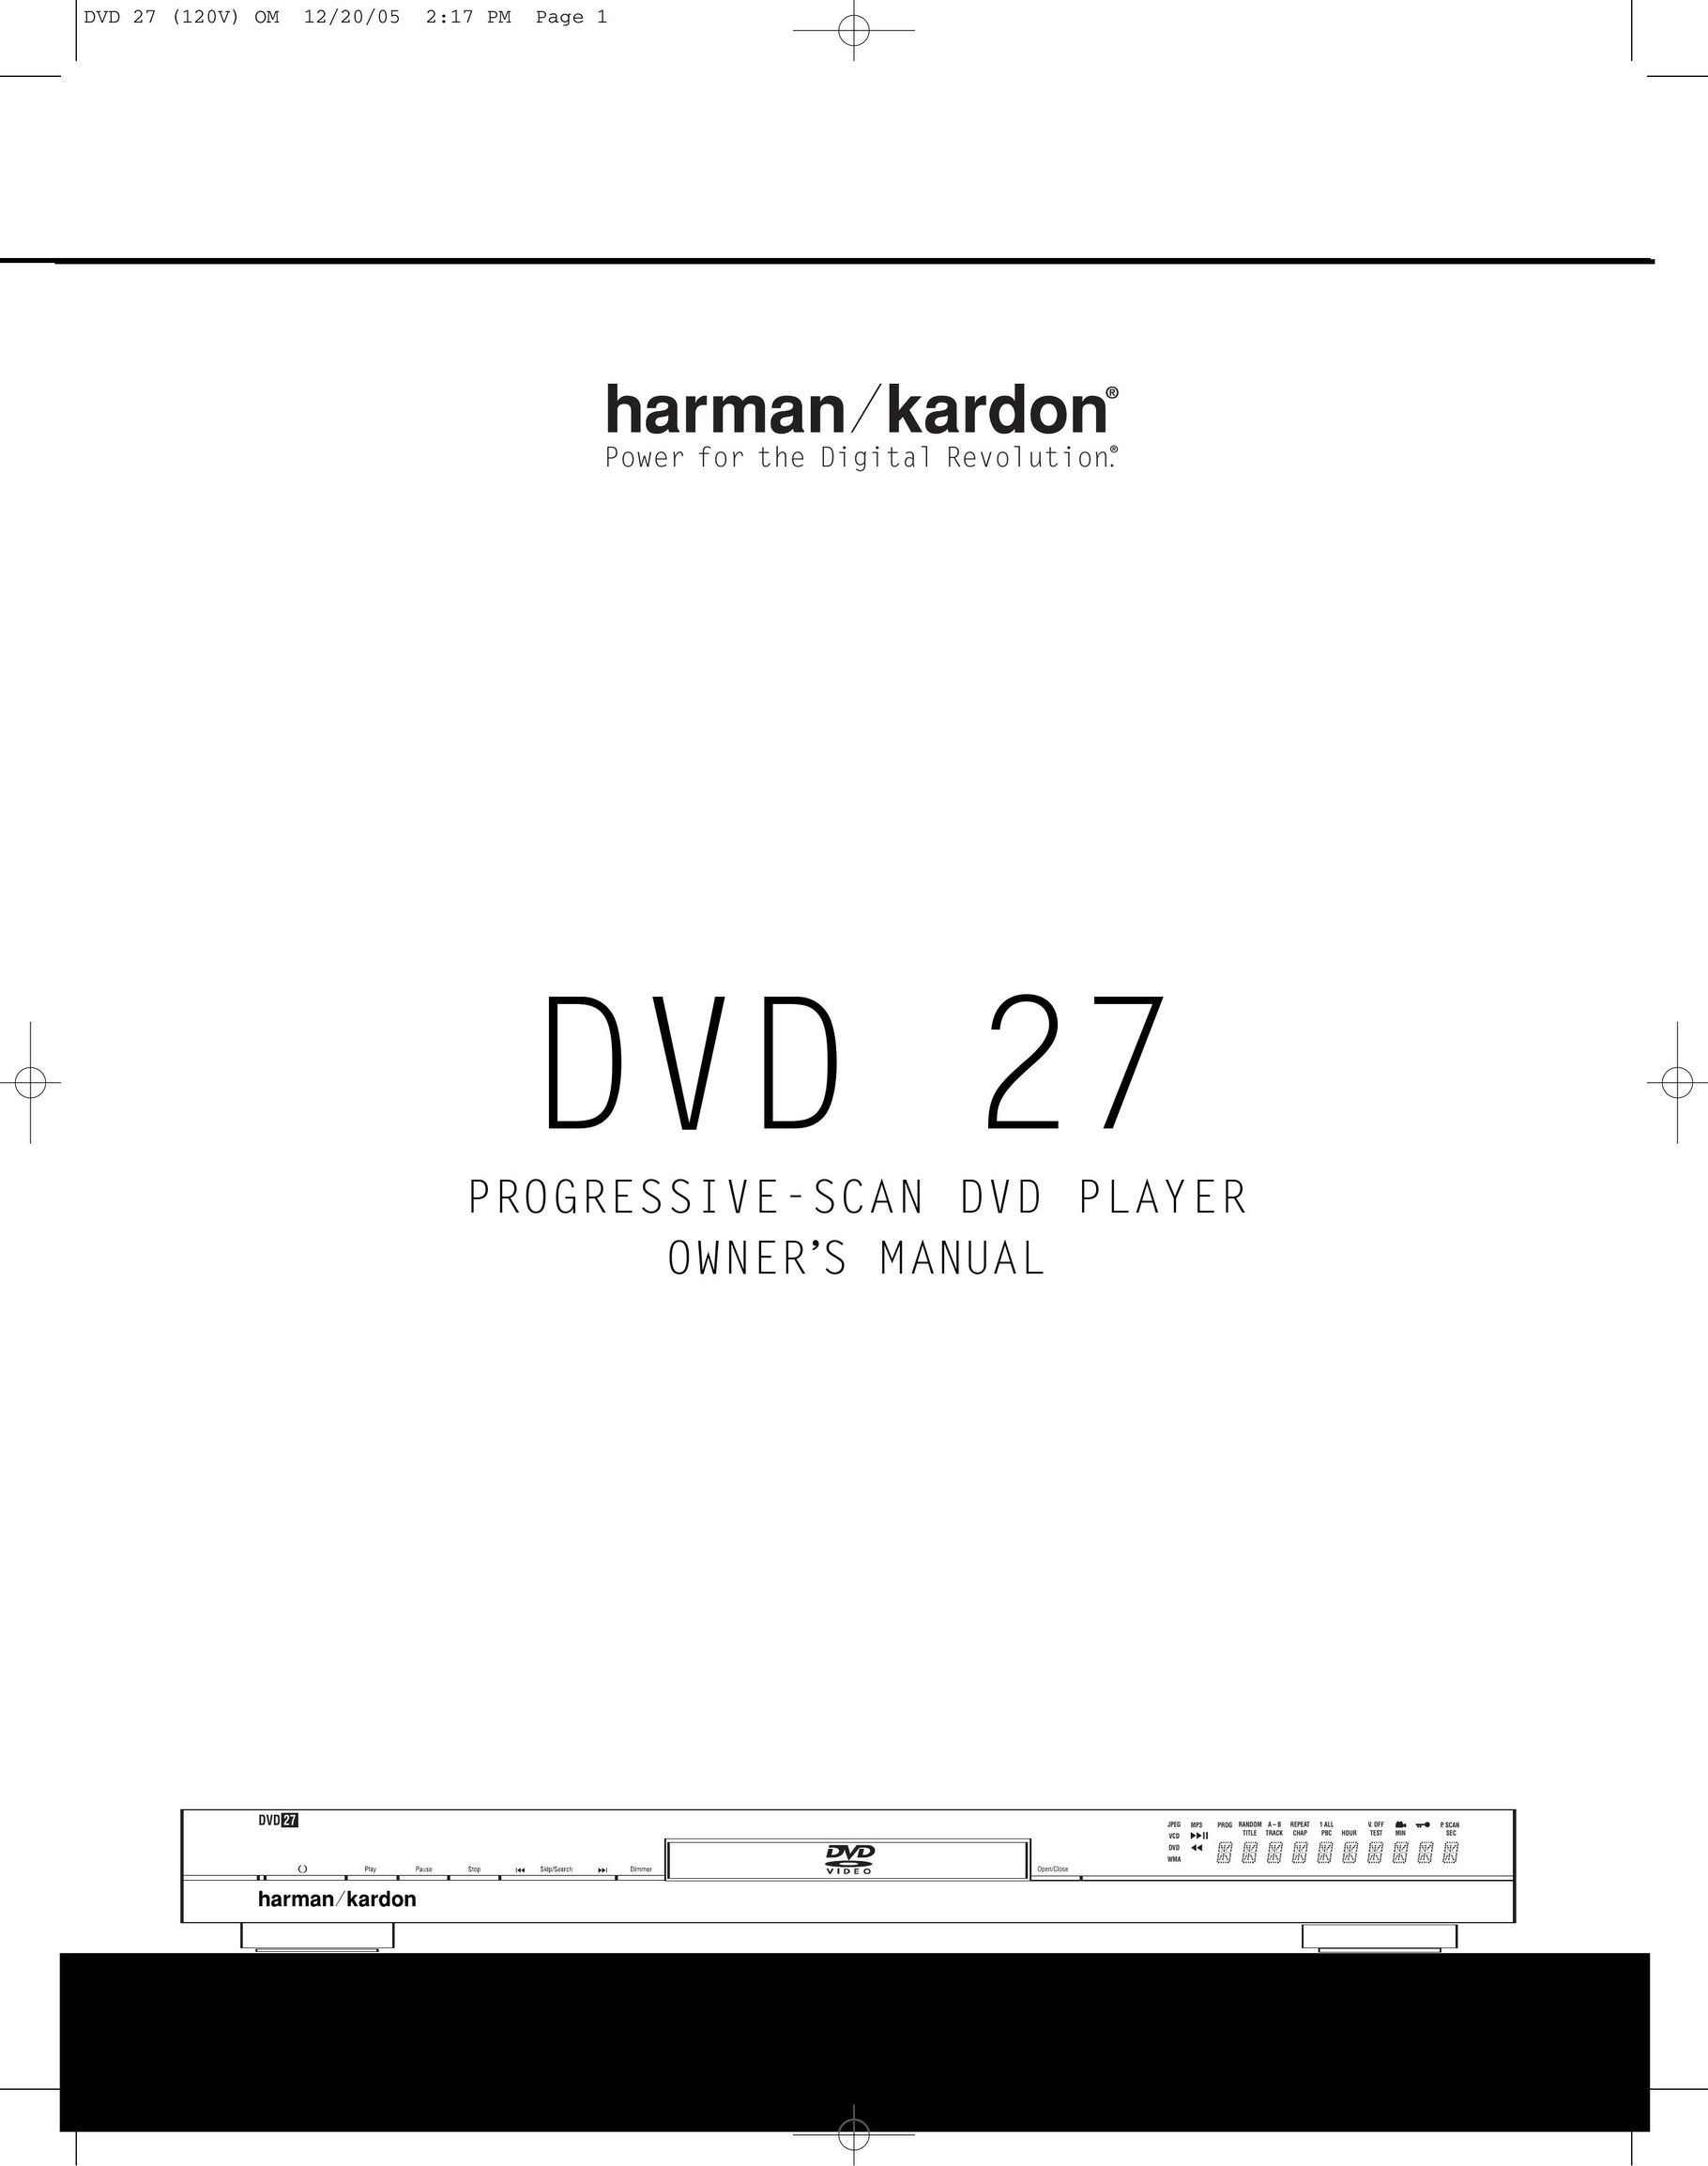 Harman-Kardon DVD 27 DVD Player User Manual